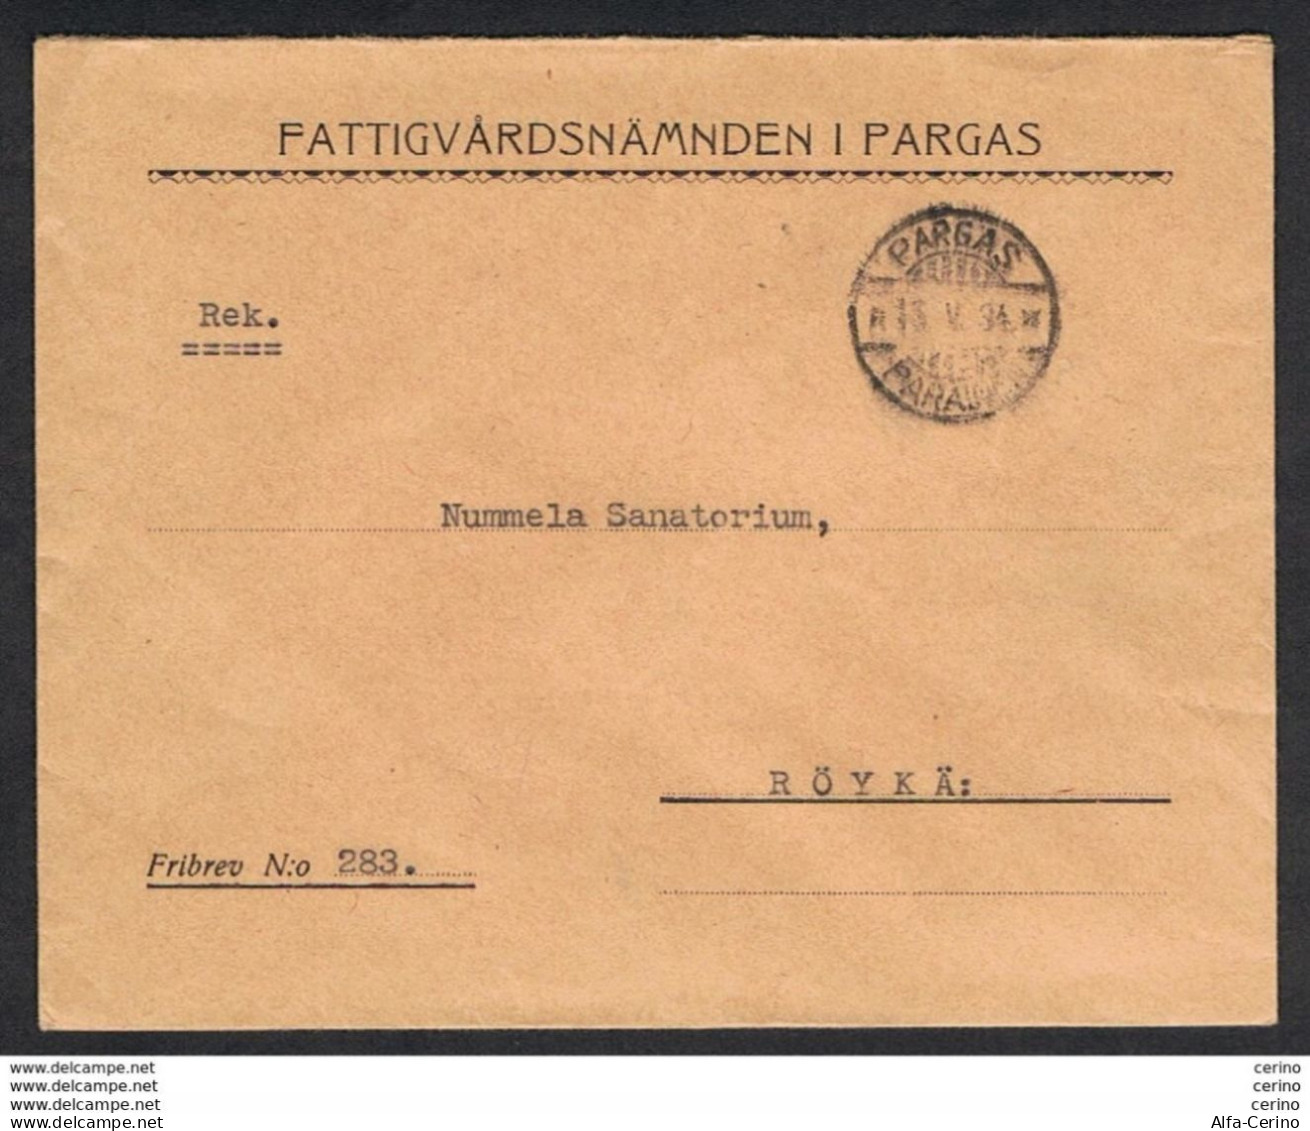 FINLAND: 1934  FREE POSTMARK ON COVERT FROM PARGAS - FATTIGVARDSNAMNDEN I ... TO ROYKA - Briefe U. Dokumente